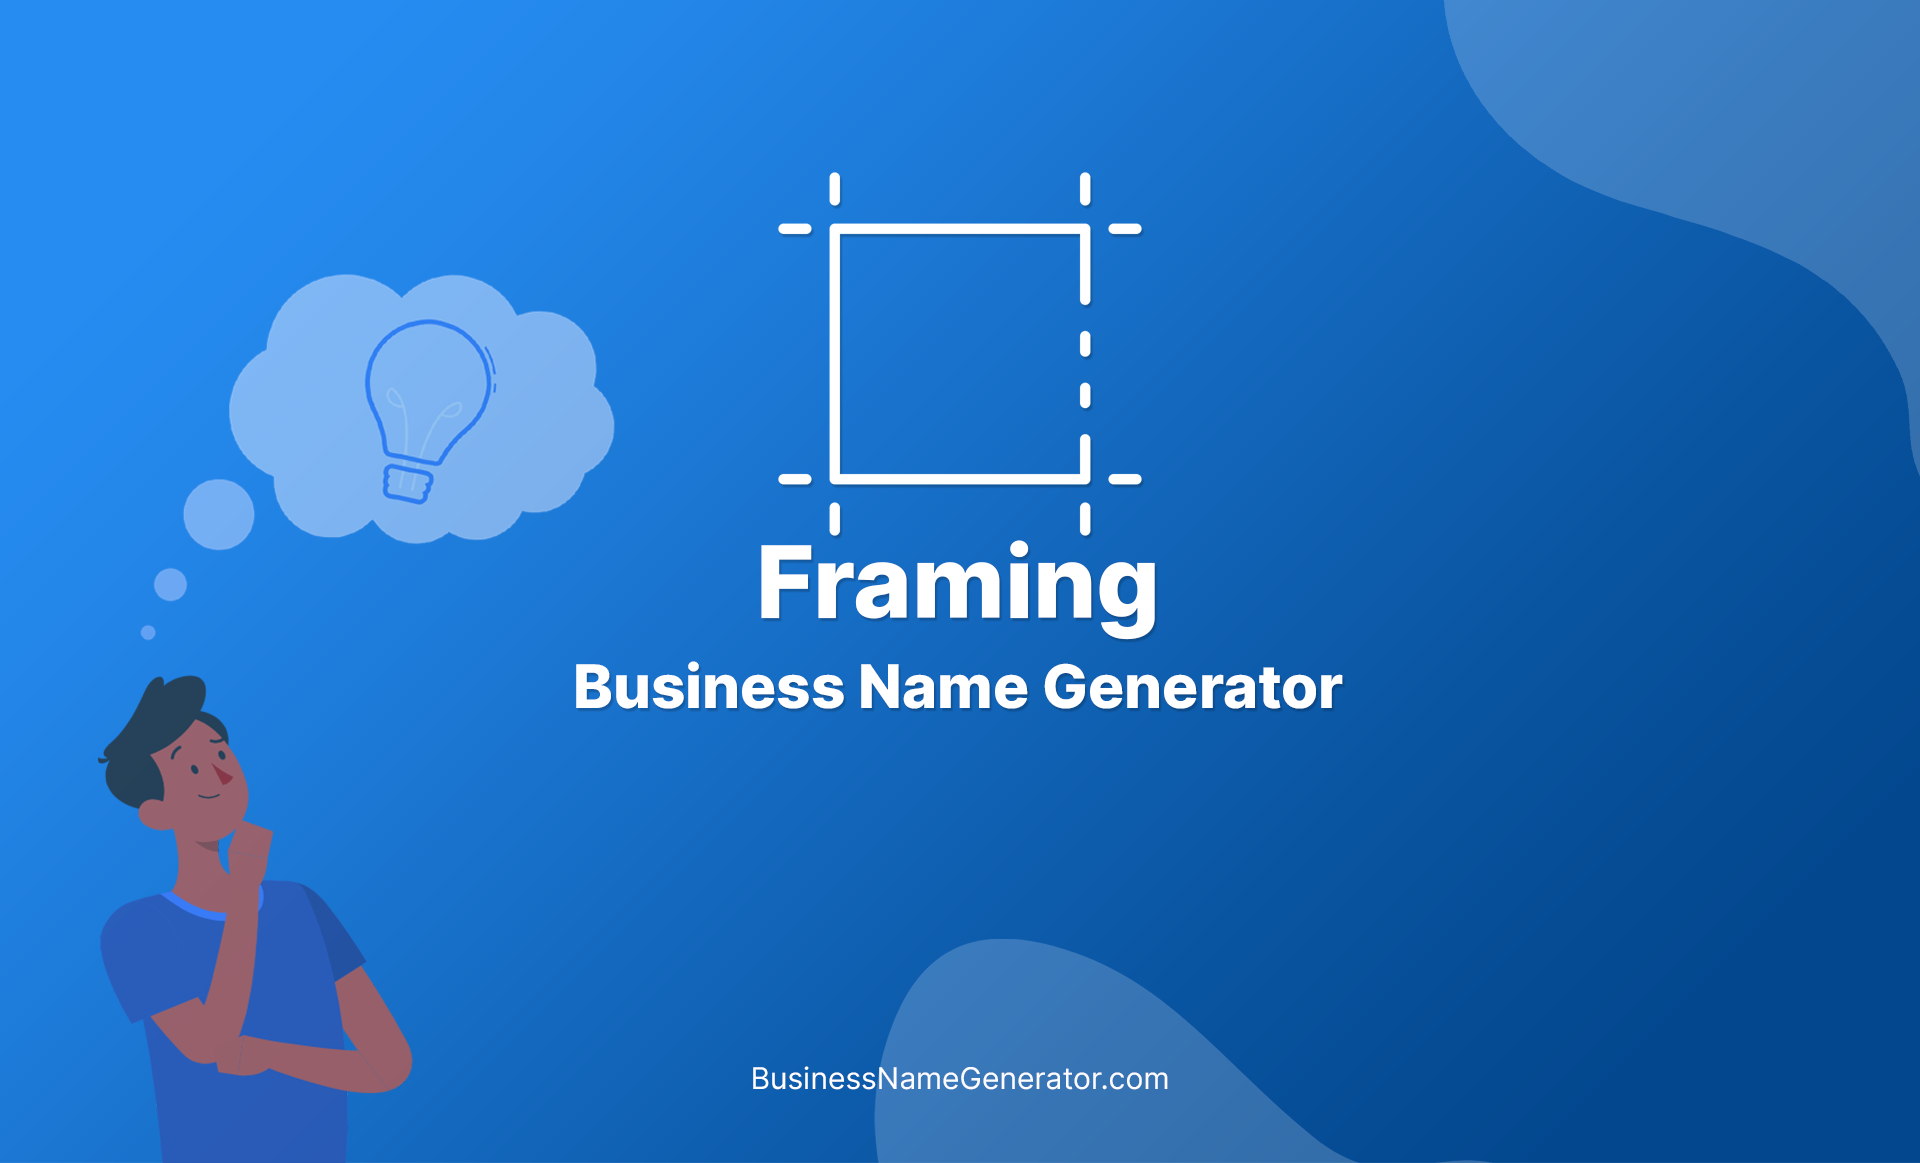 Framing Business Name Generator